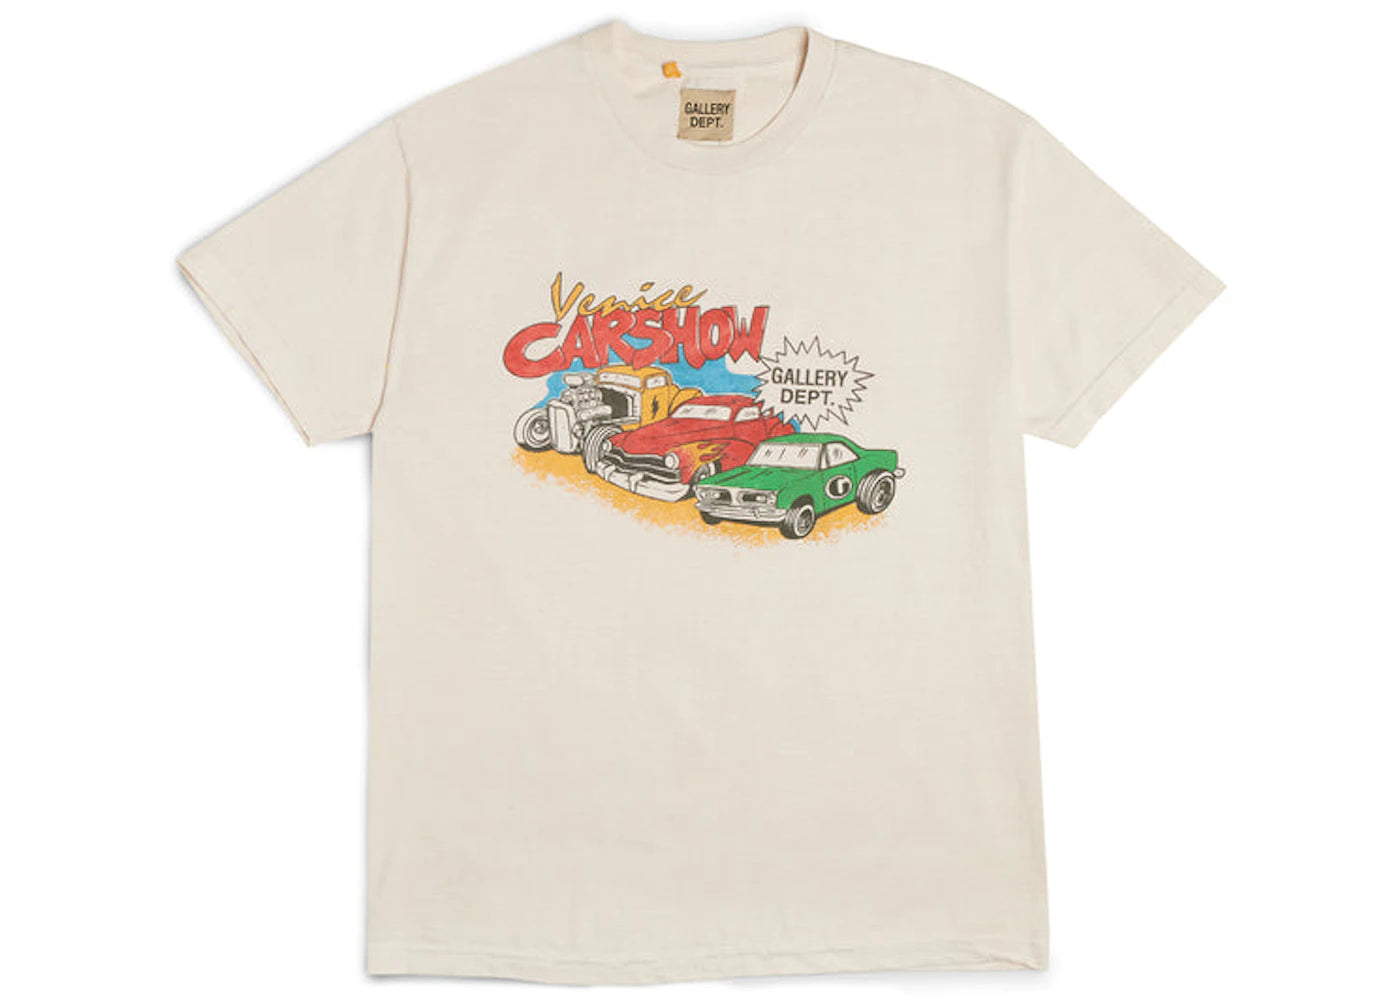 Gallery Dept. Car Show T-Shirt Cream